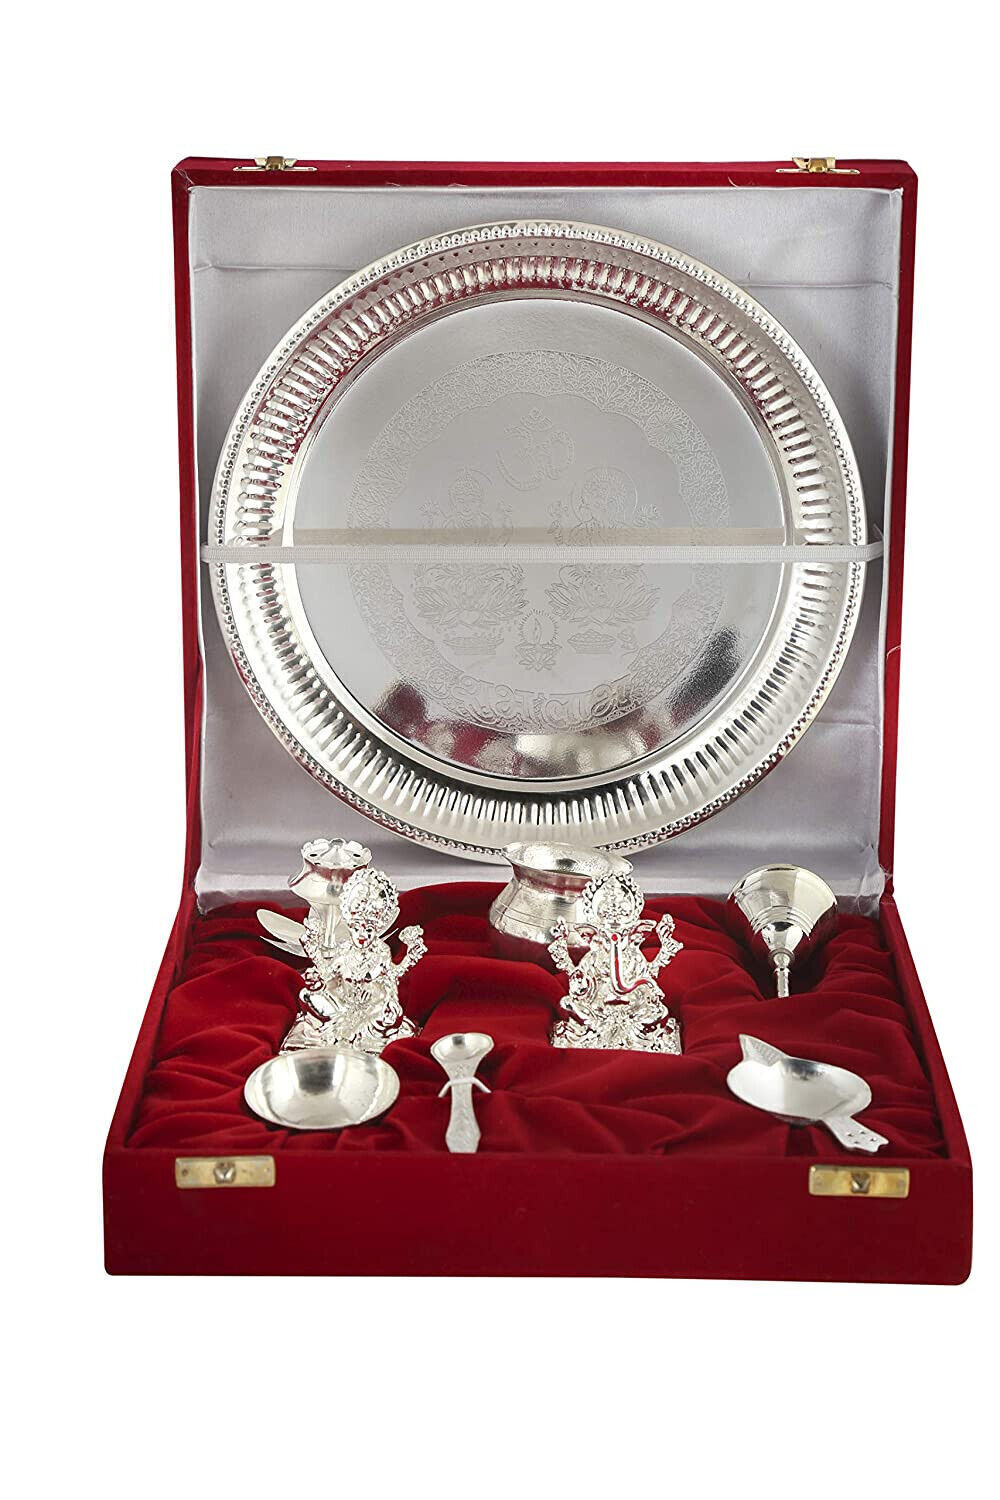 Silver Pooja Thali with Laxmi Ganesh Murti For Diwali Puja Set of 9